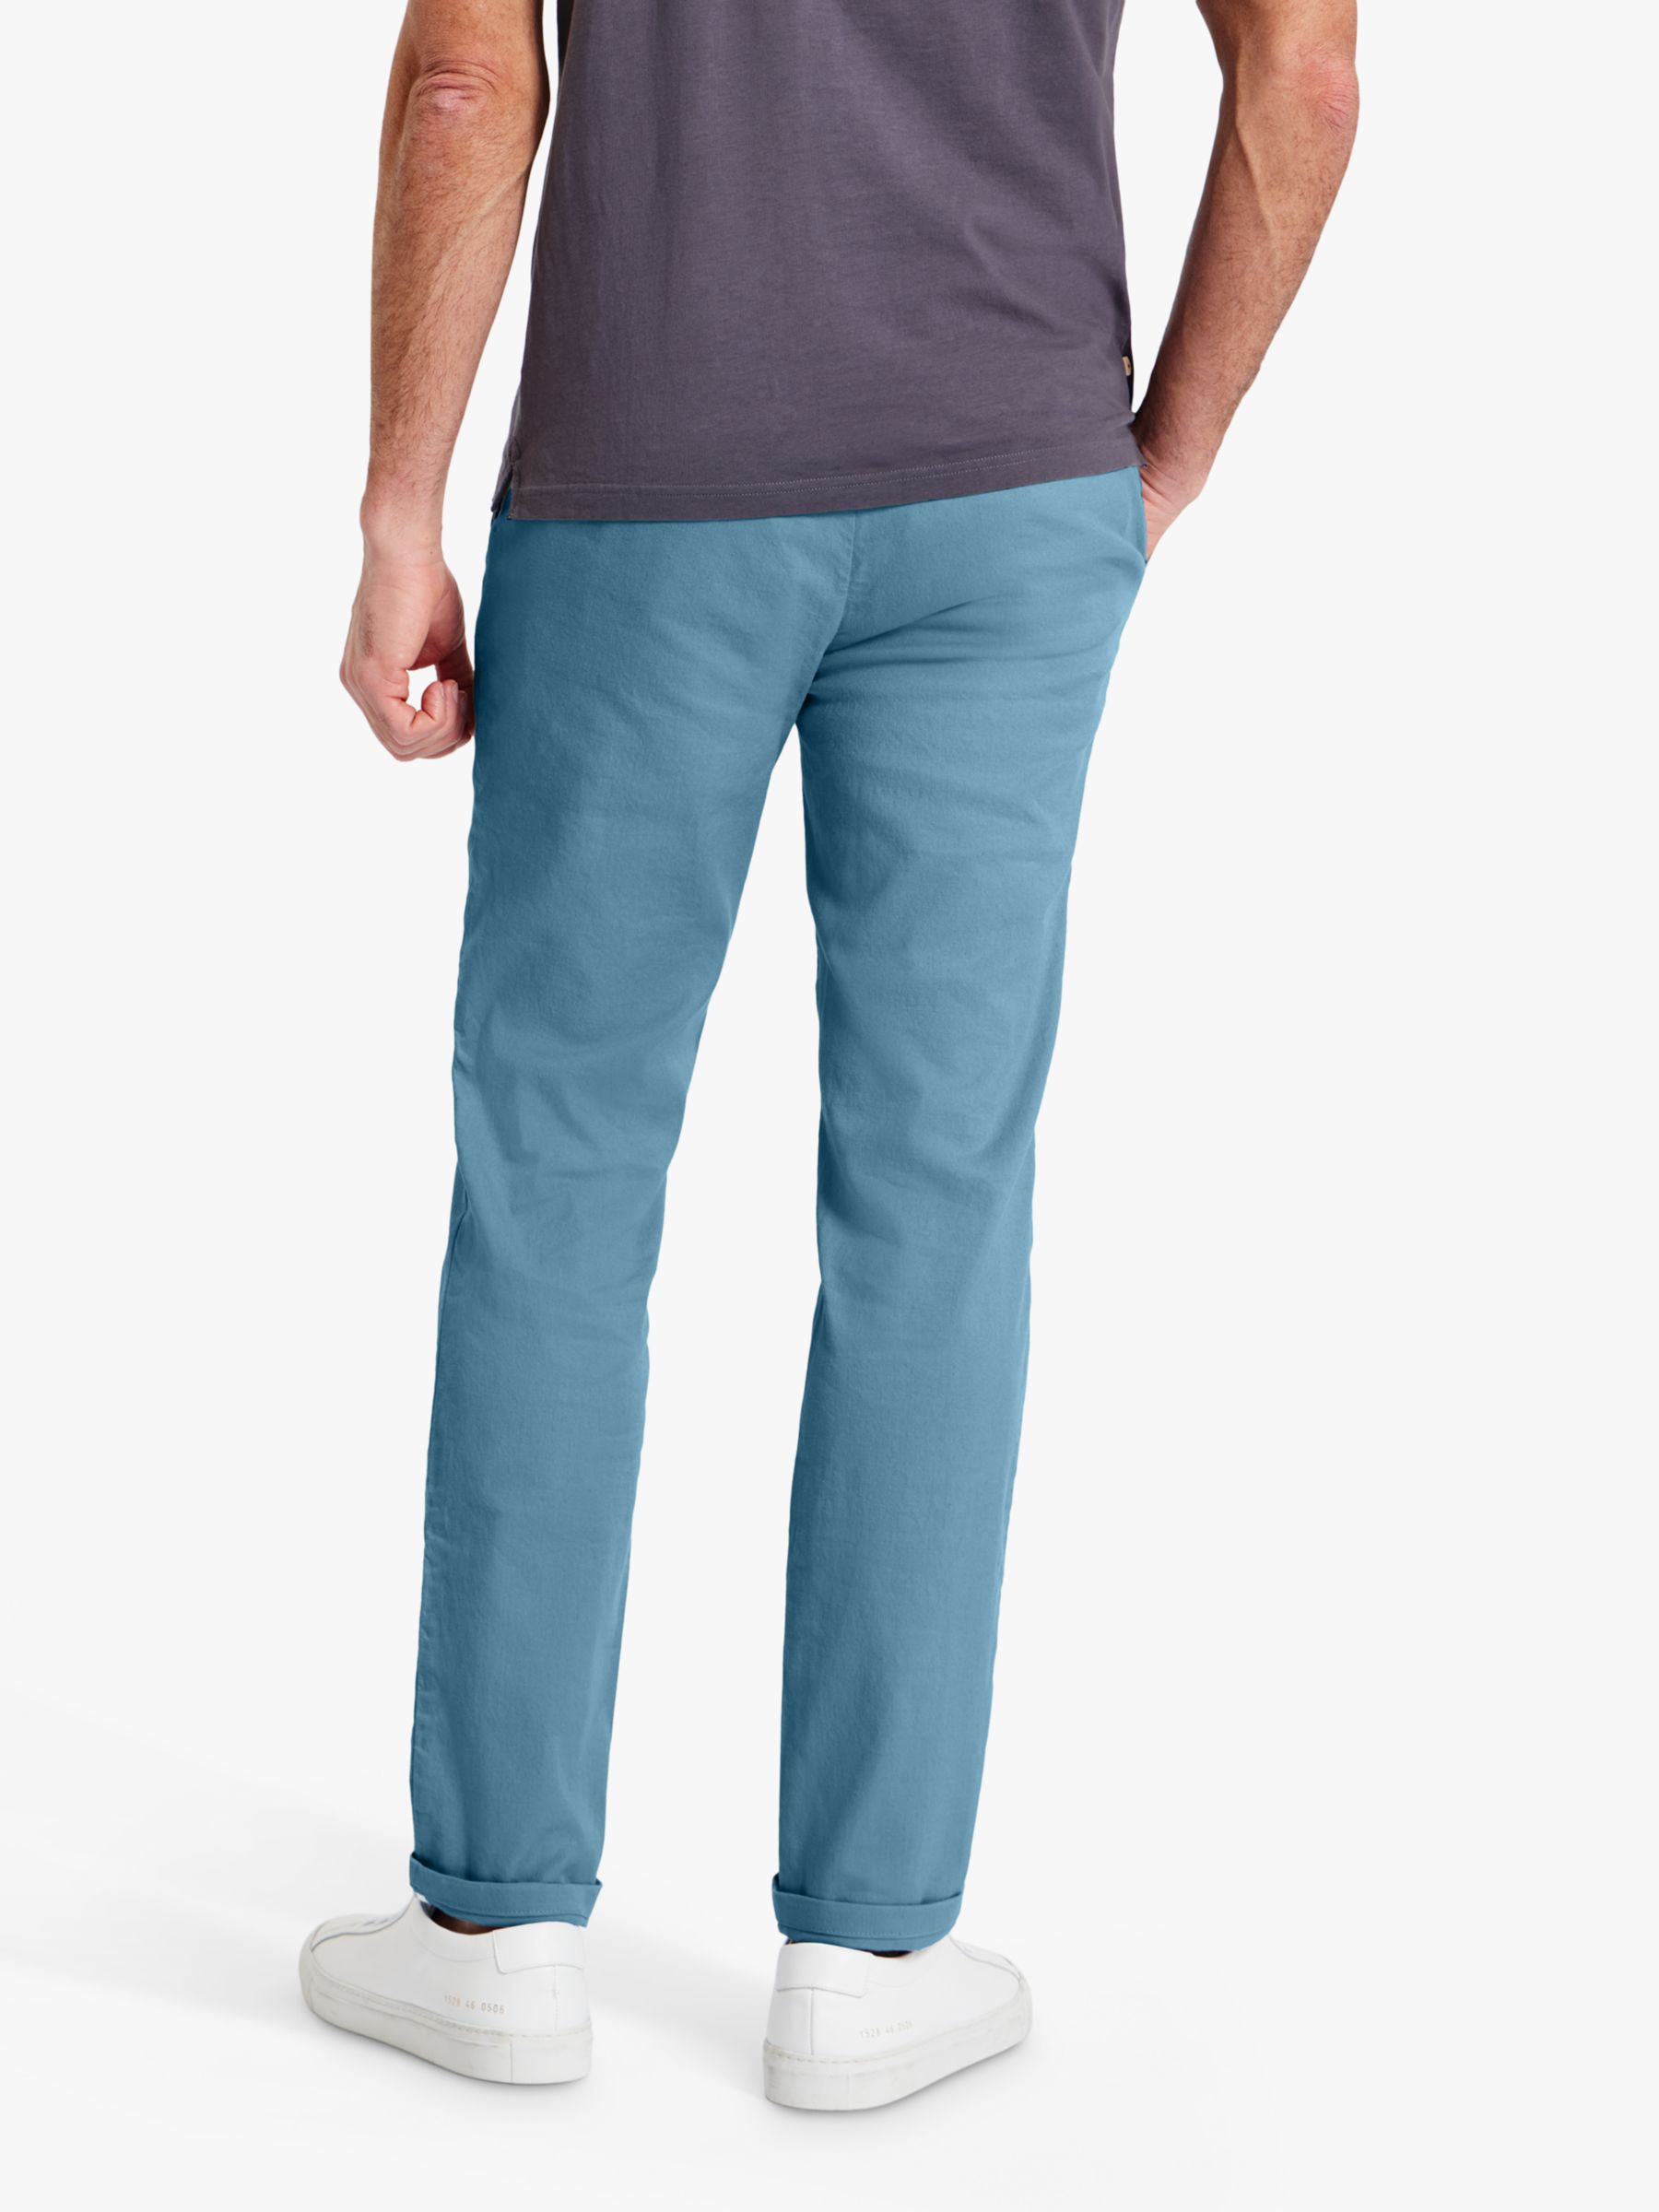 SPOKE Linen Sharps Slim Thigh Trousers, Aegean, W36/L34